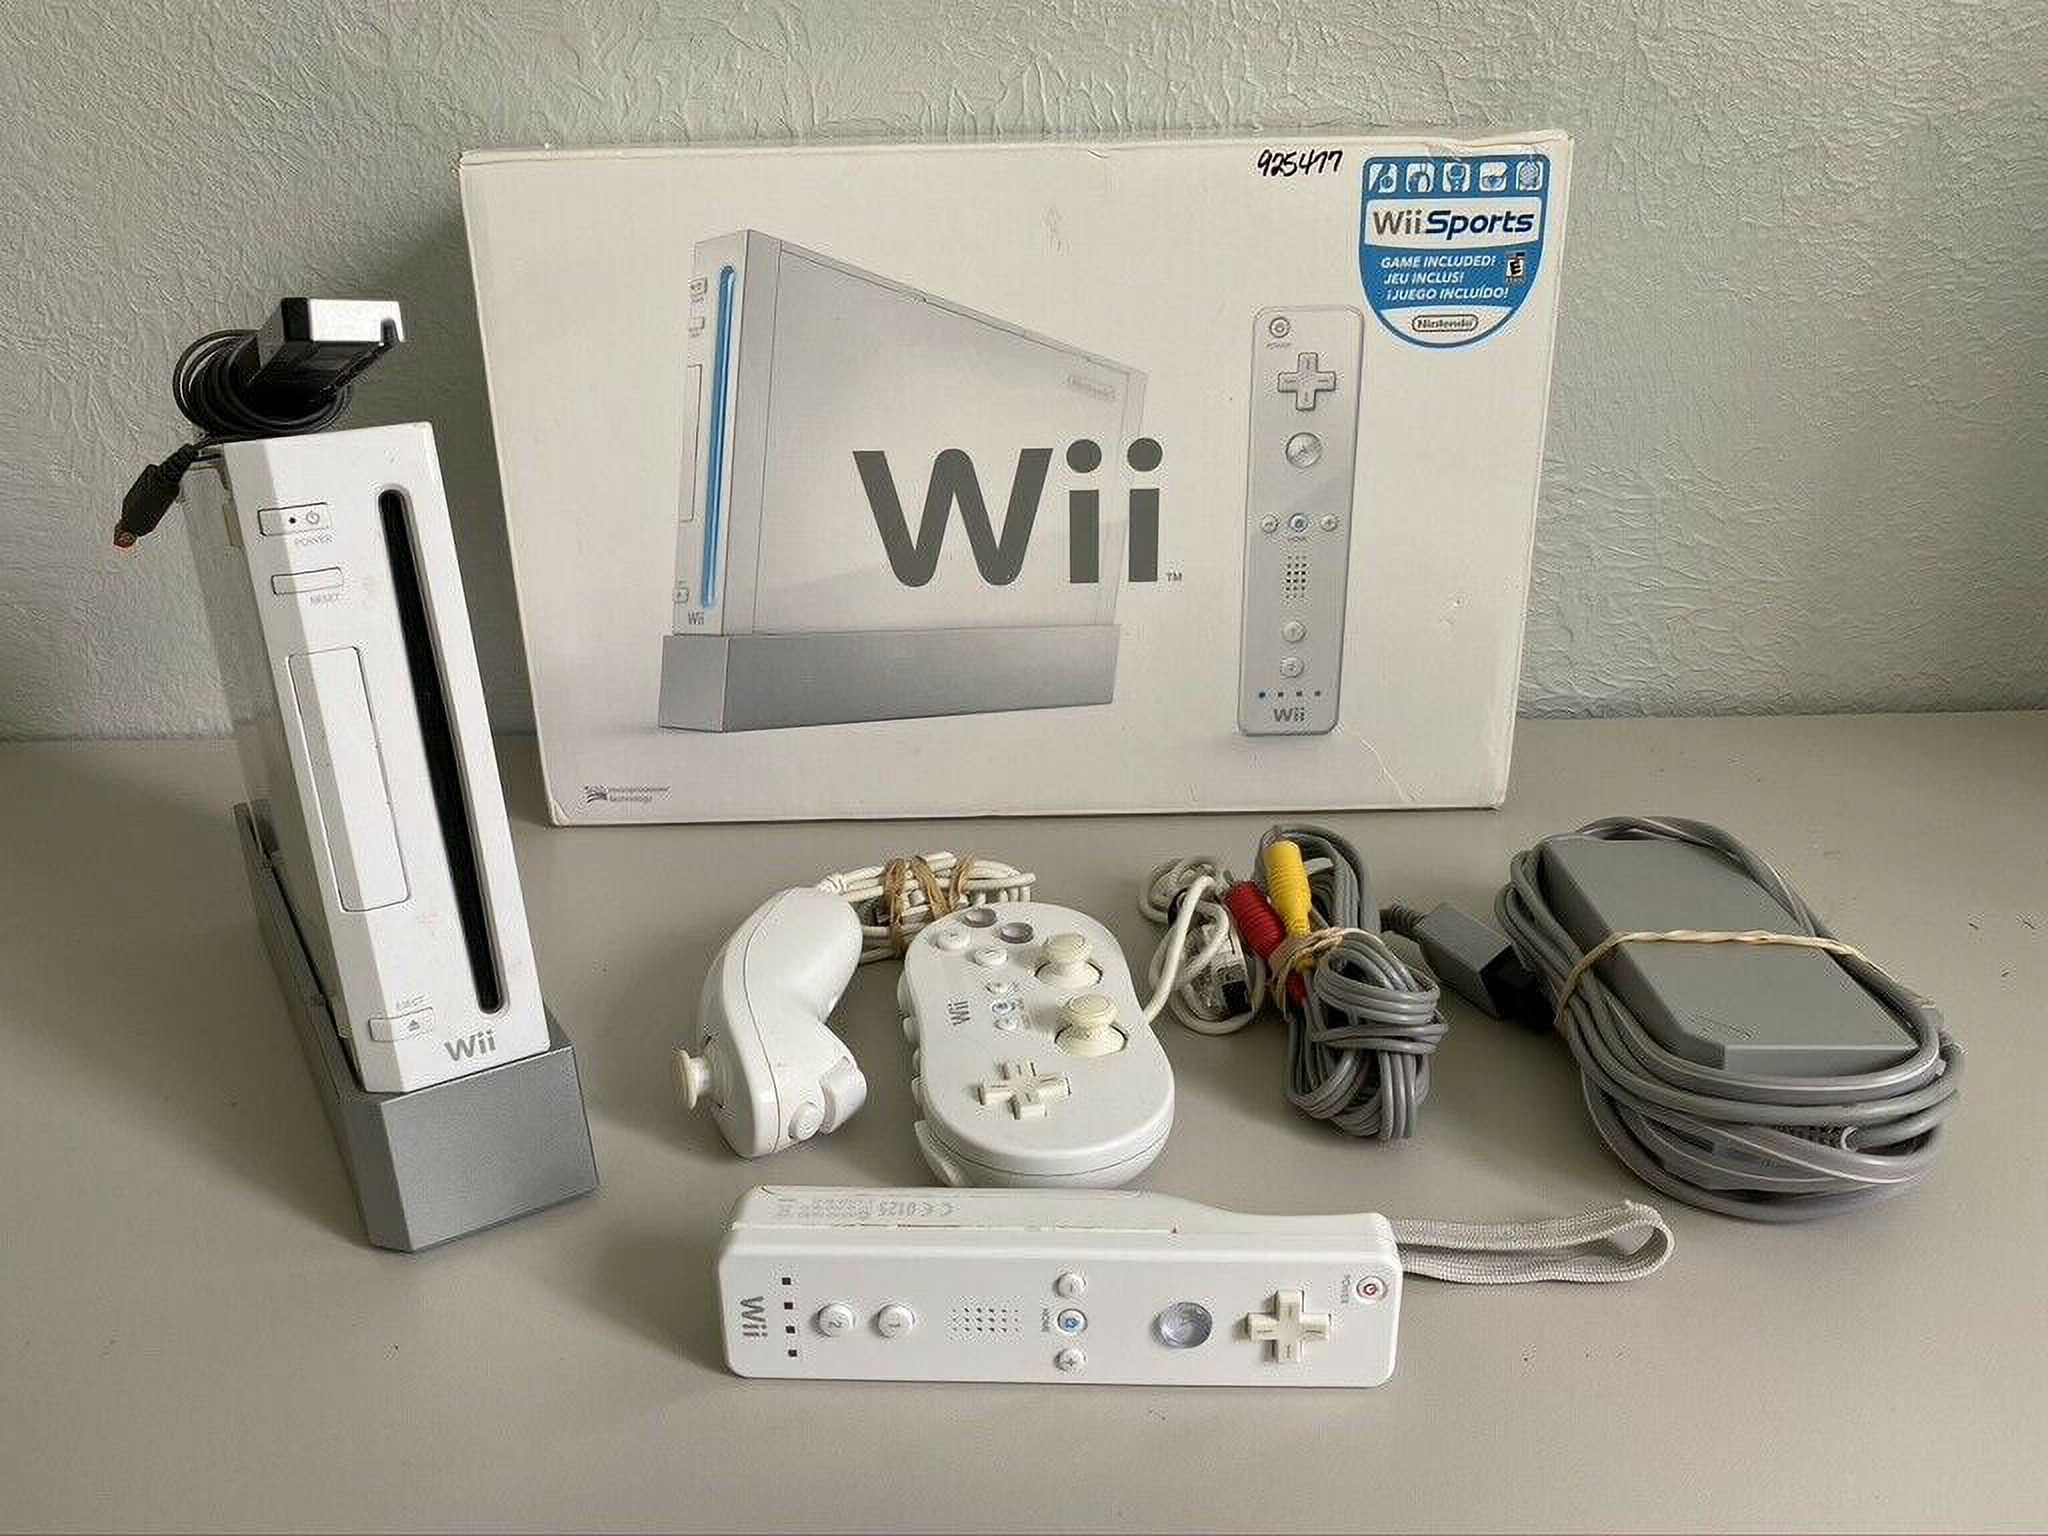 Restored Nintendo Wii Console, White (Refurbished) - image 2 of 3